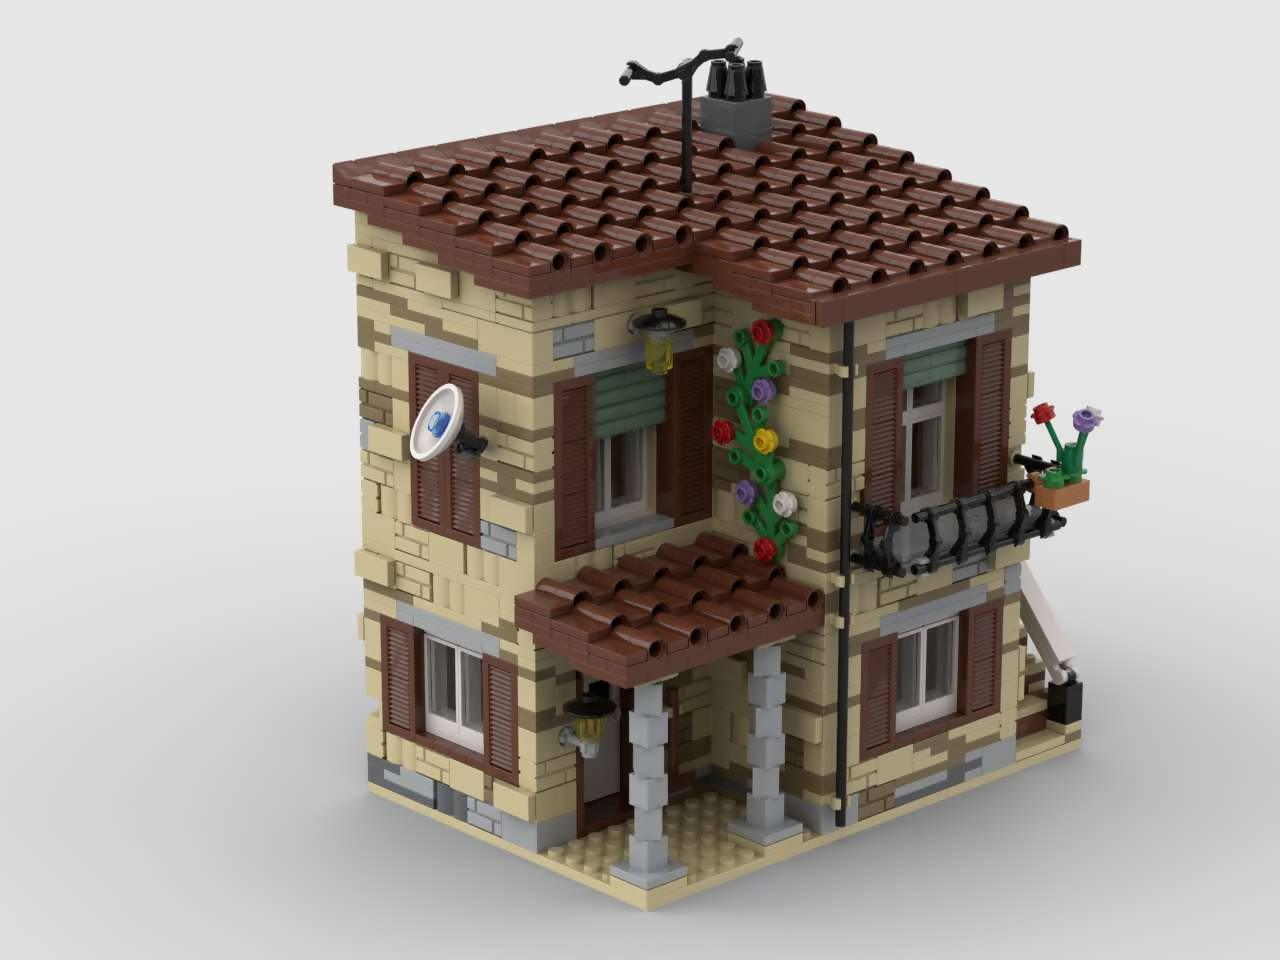 Design you custom lego brickheadz by Guygabizon